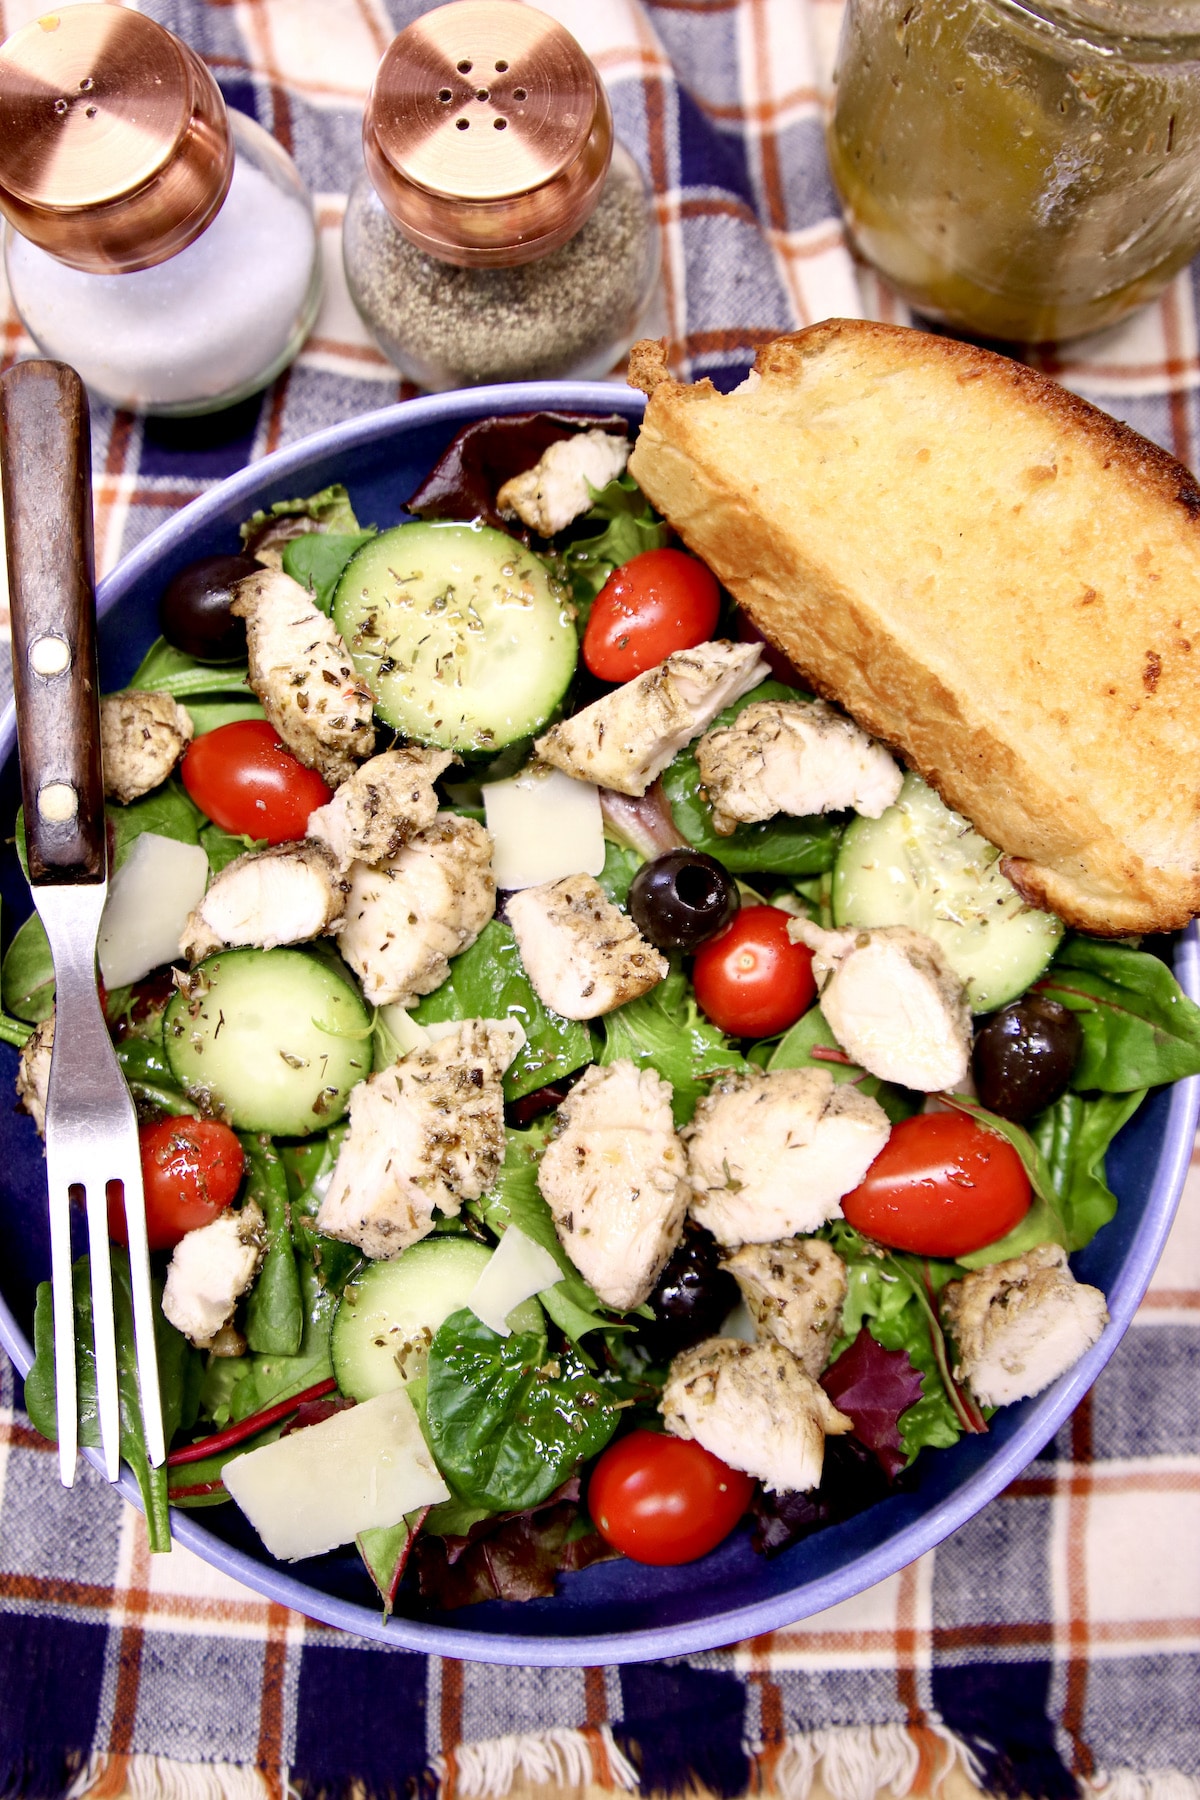 Bowl of chicken salad with garlic bread.